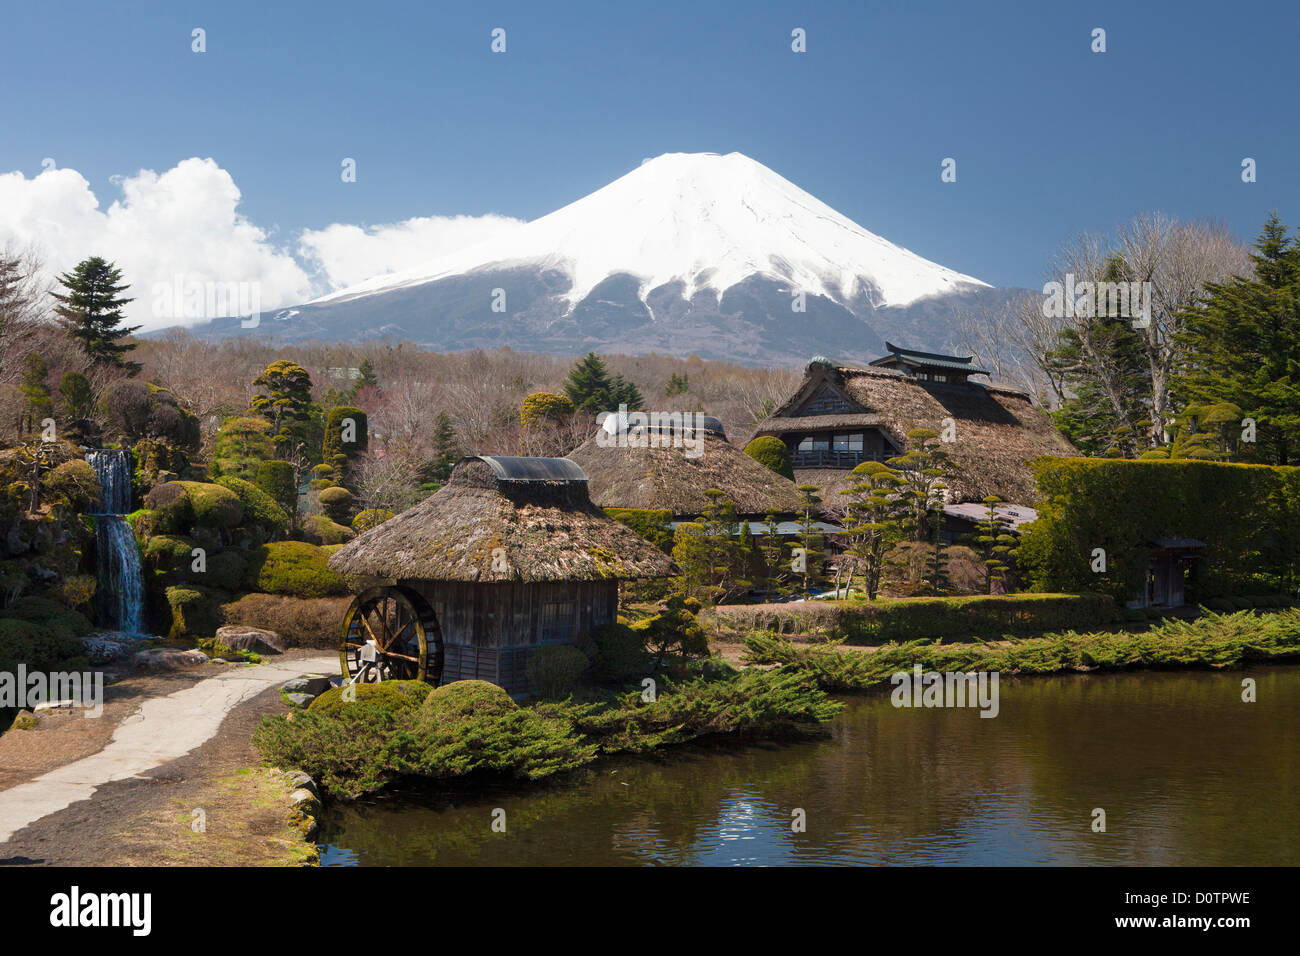 Japan, Asia, holiday, travel, Oshino, Traditional architecture, Fuji, Mount Fuji, Fujiyama, mountain, snow, spring, volcano, gar Stock Photo